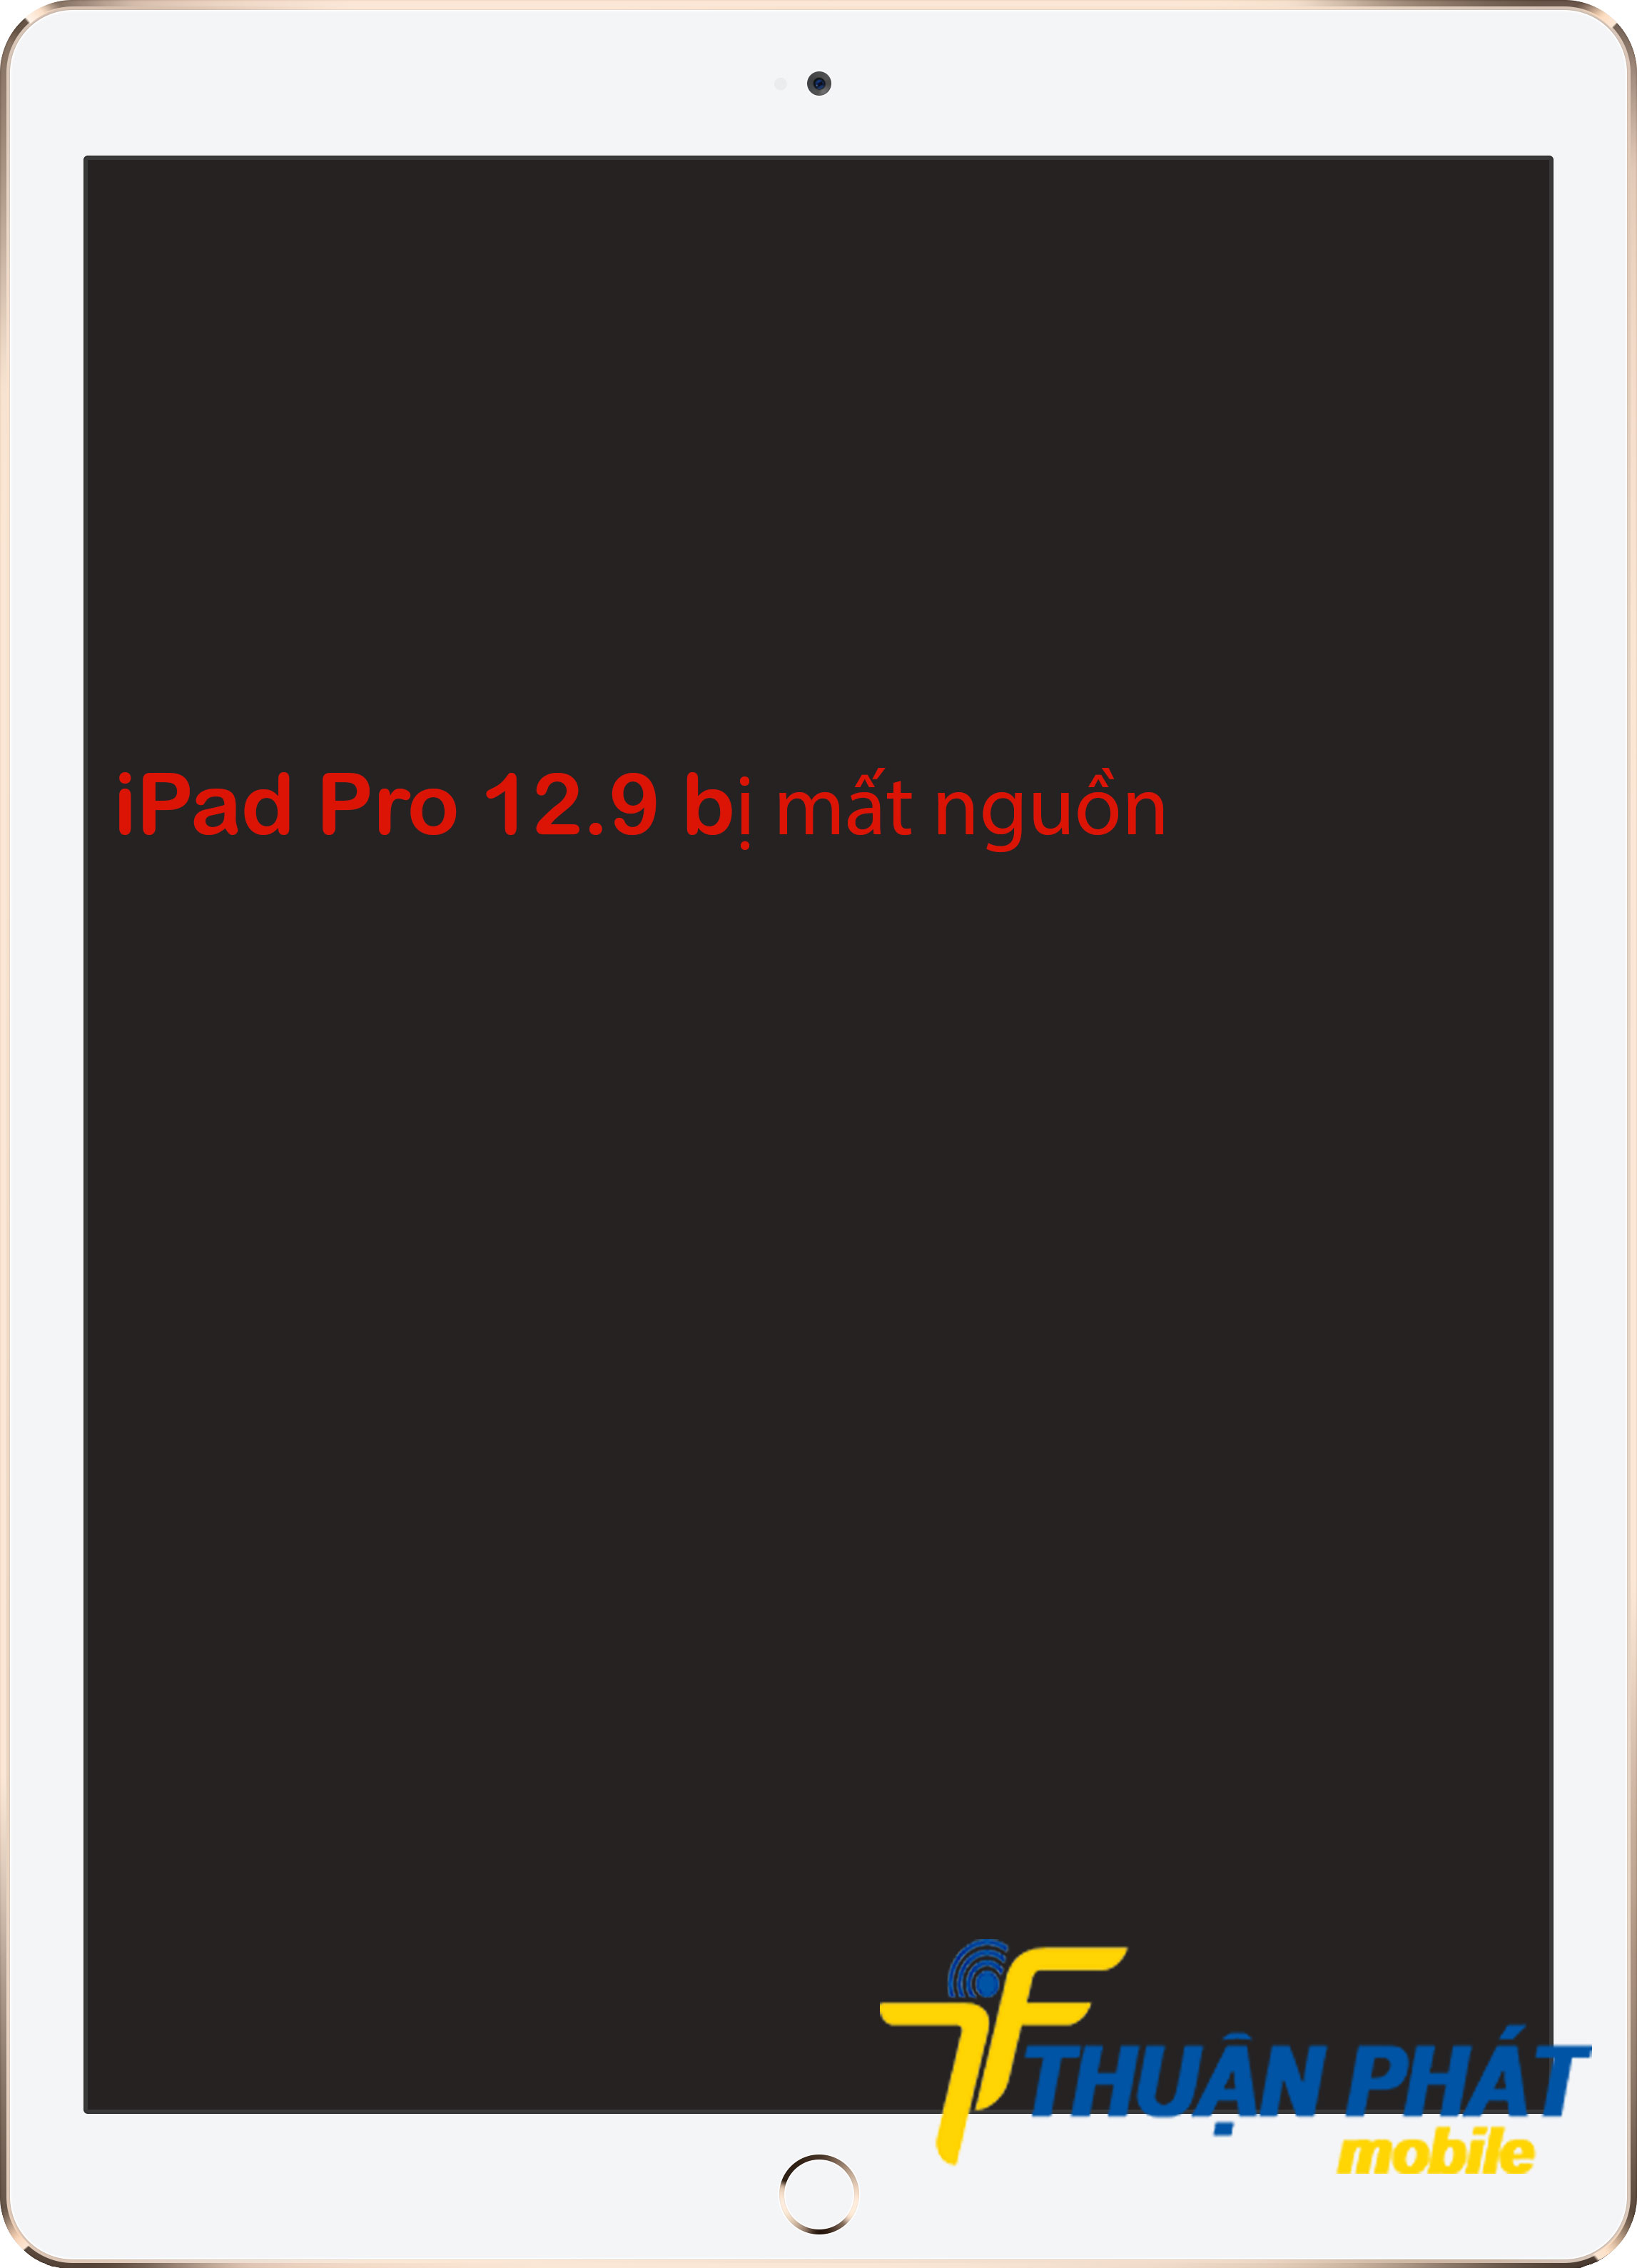 iPad Pro 12.9 bị lỗi mất nguồn